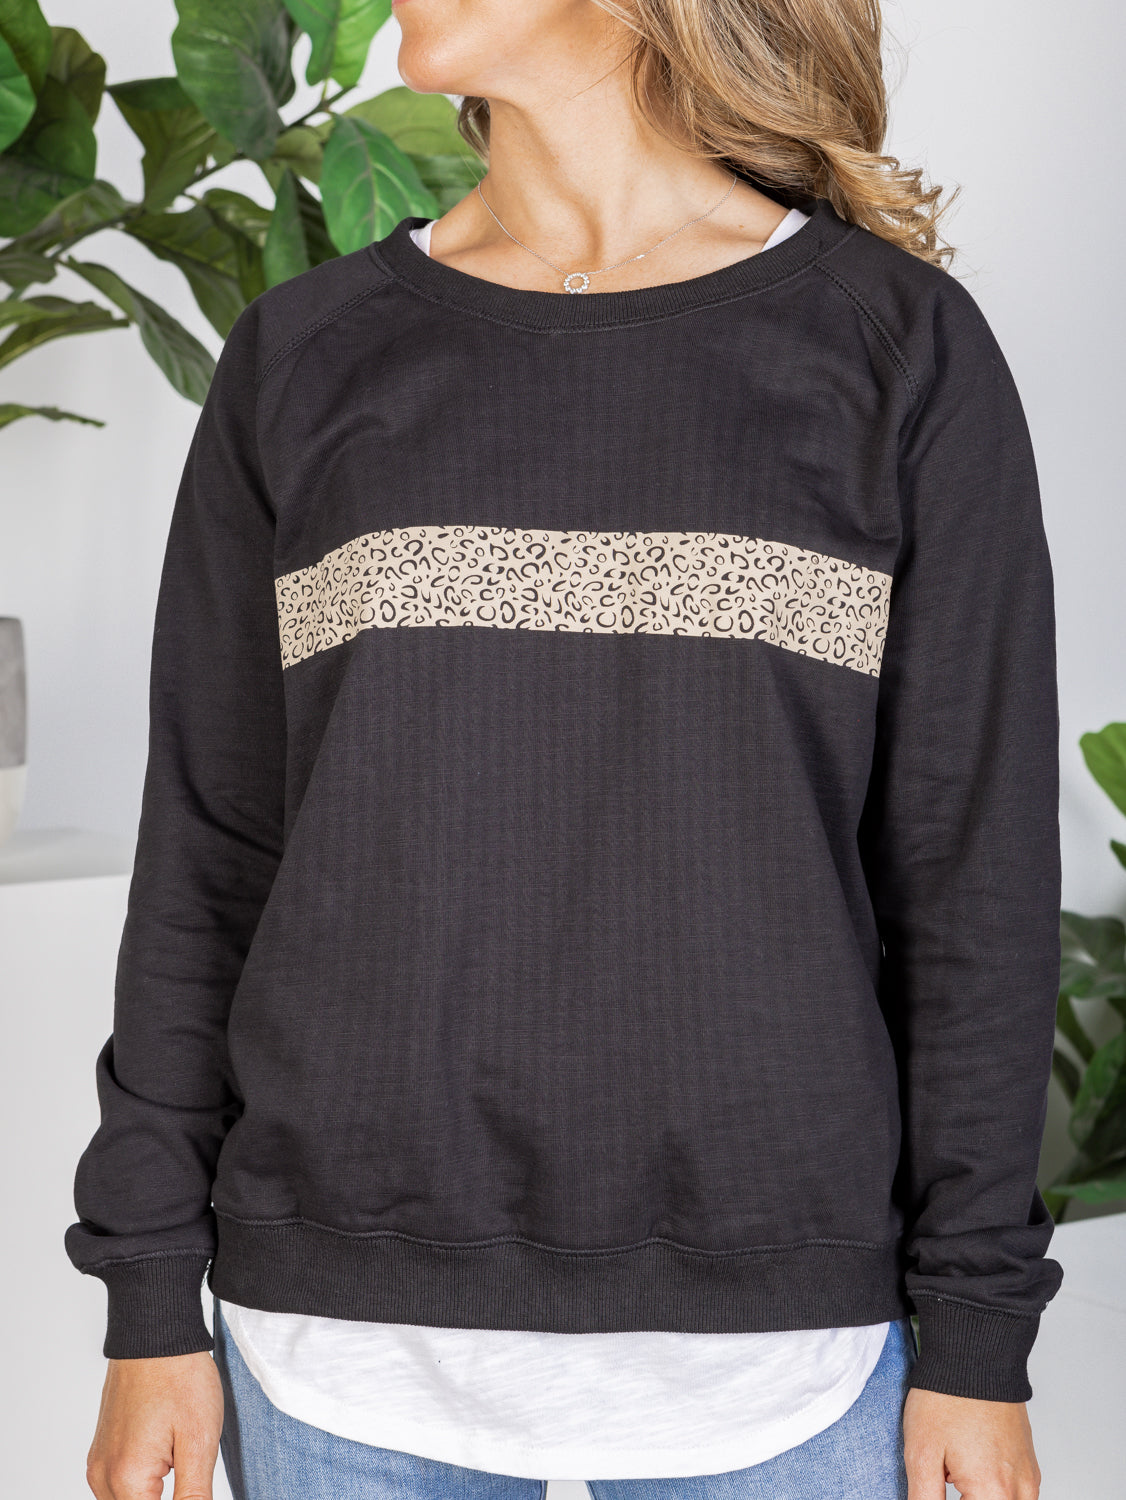 Kulinda Black Leopard Panel Print Sweater